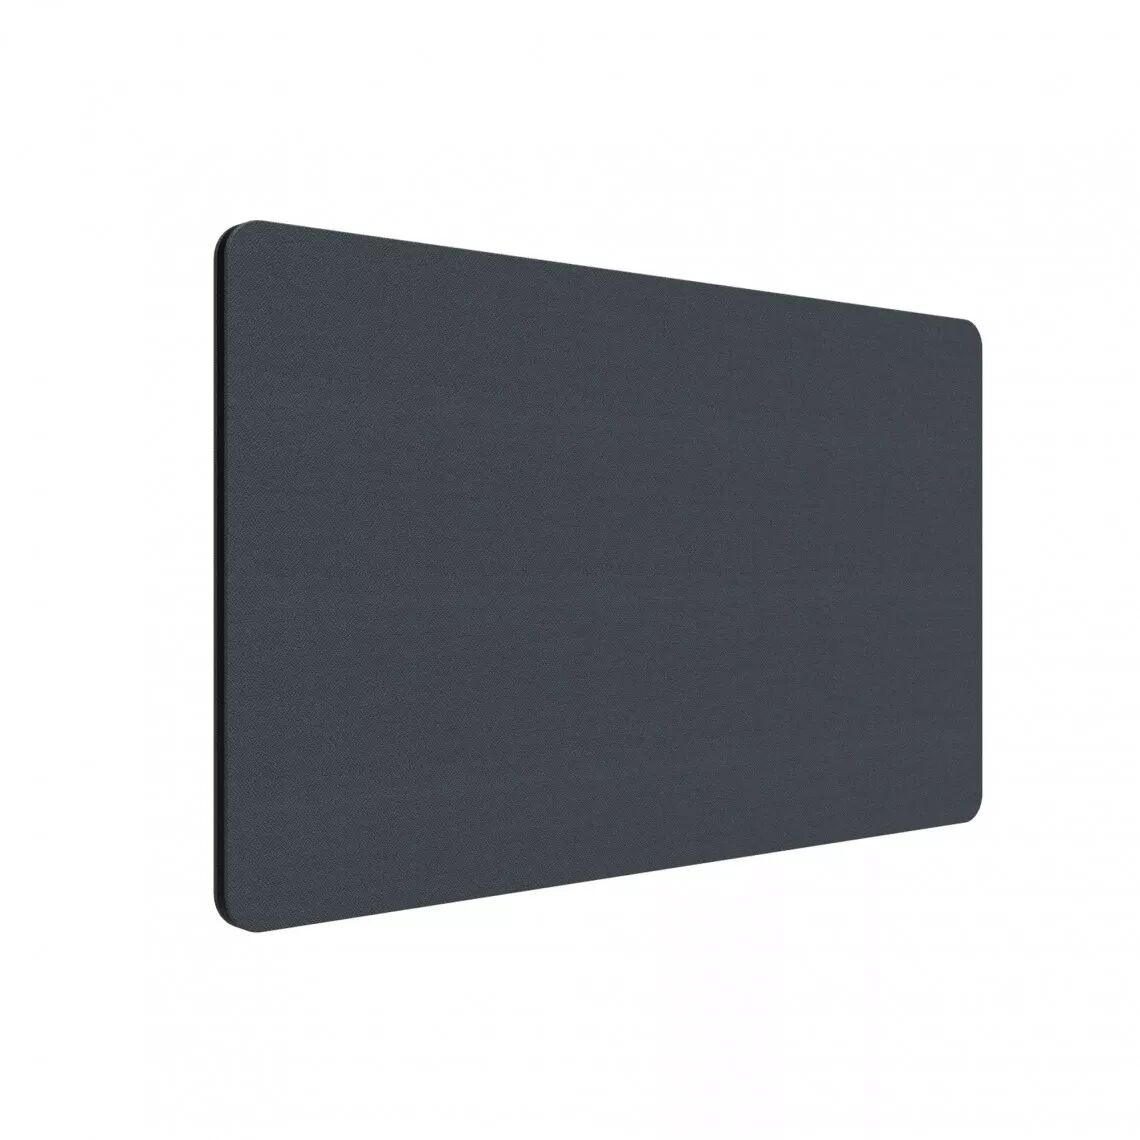 Lintex Tischtrennwand Edge, Farbe Stingray YA311 - Dunkelgrau, Größe B80 x H70 cm, Leistenfarbe Schwarz